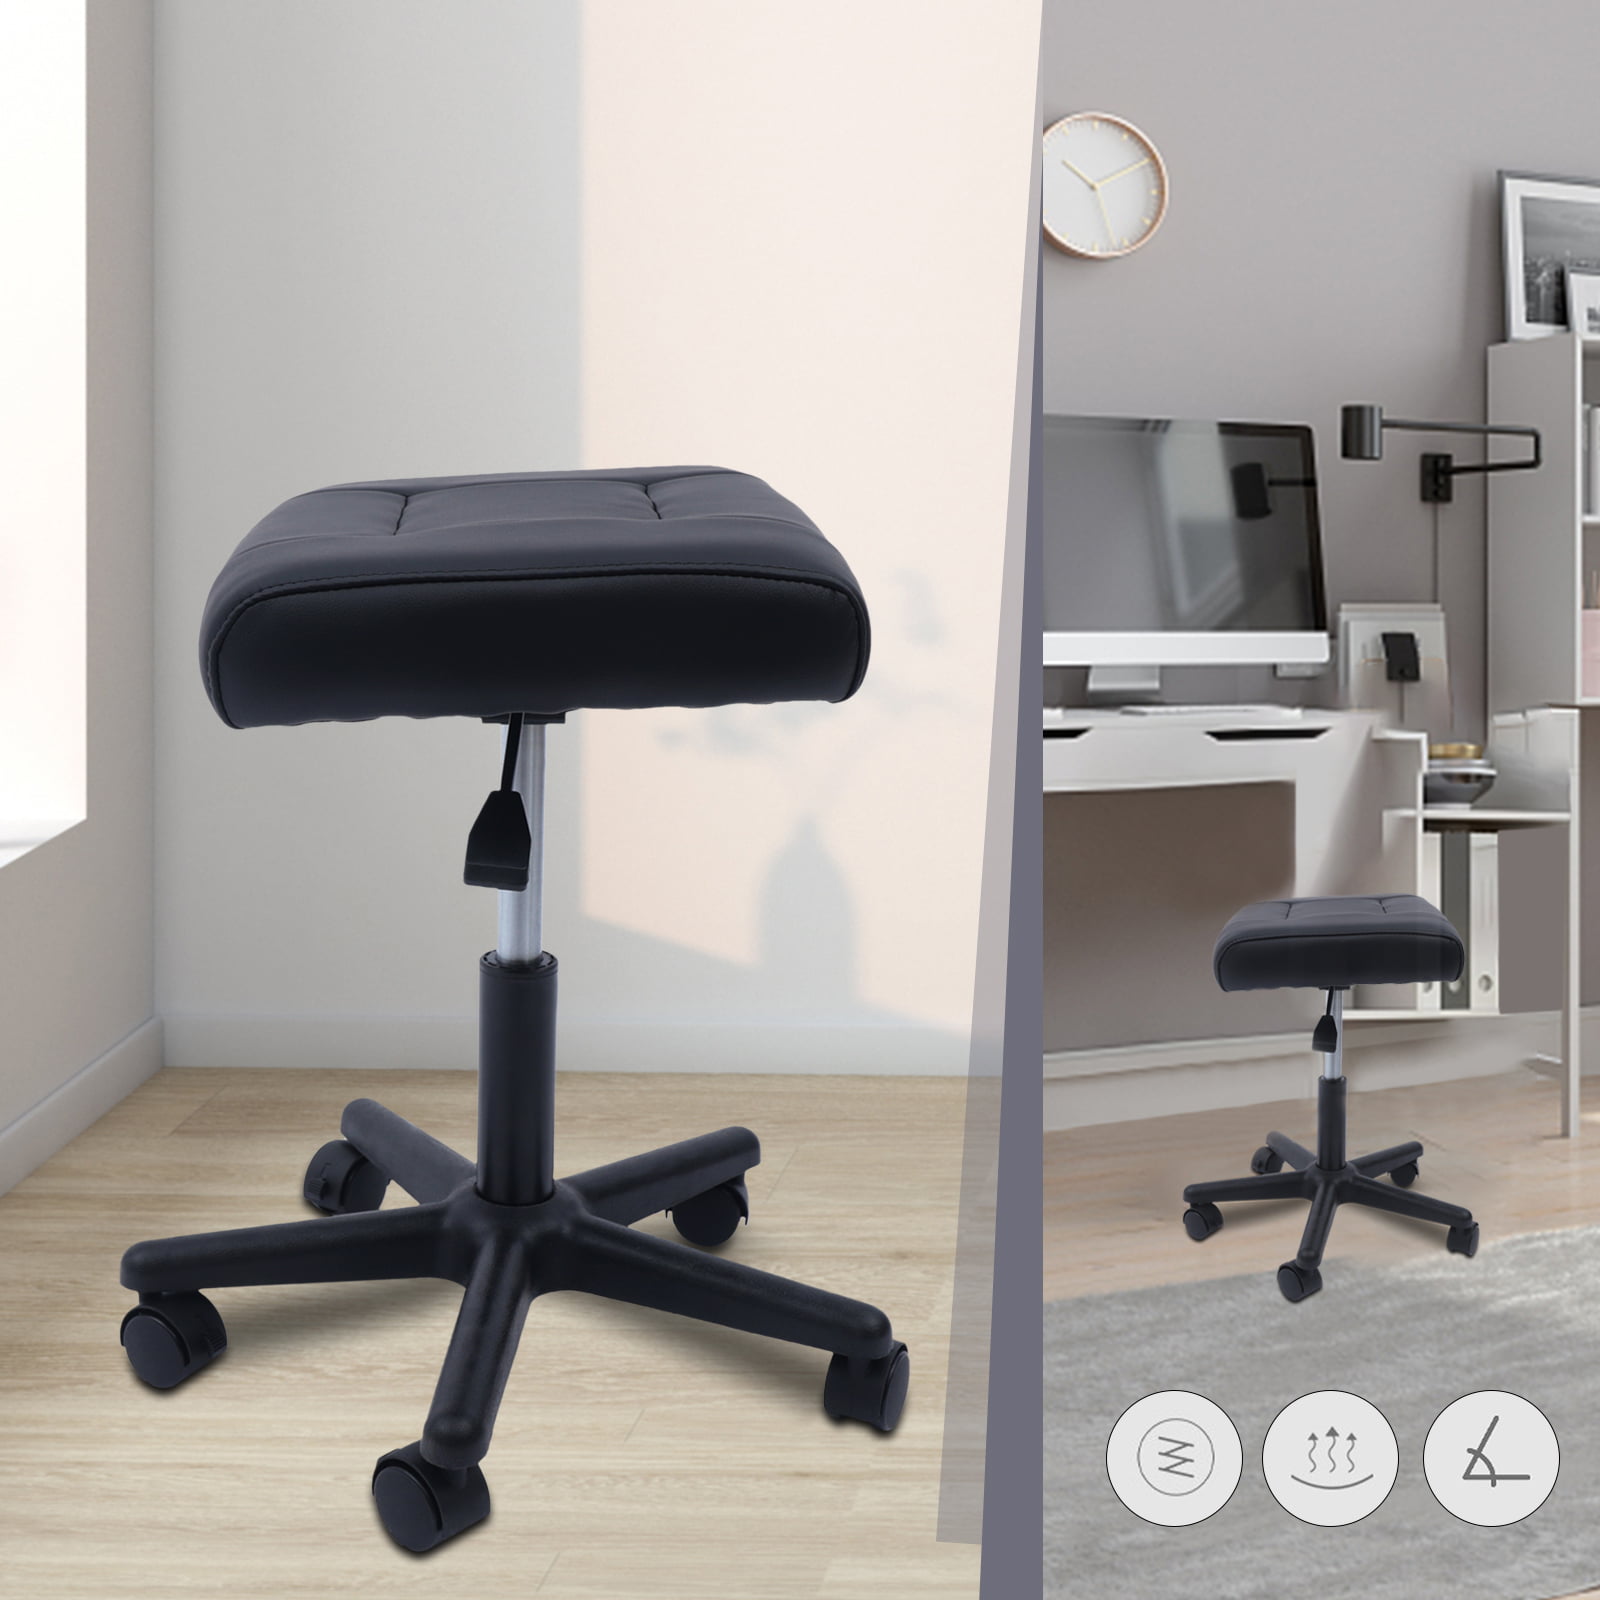 ComfiLife Foot Rest Under Desk for Office Use – Adjustable Height Memory  Foam Foot Stool Under Desk